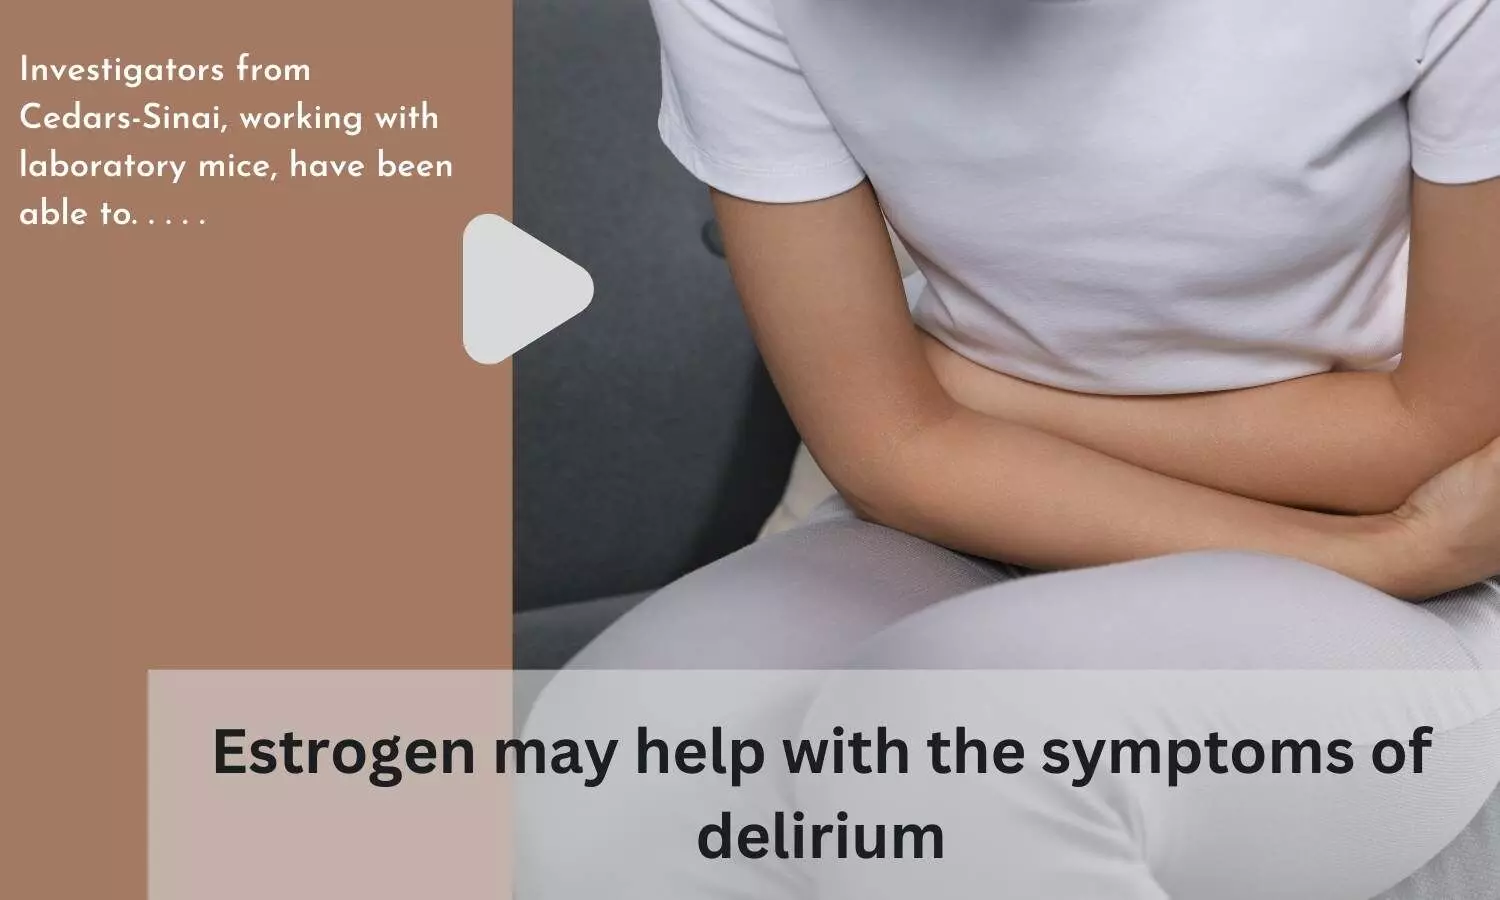 Estrogen may help with the symptoms of delirium